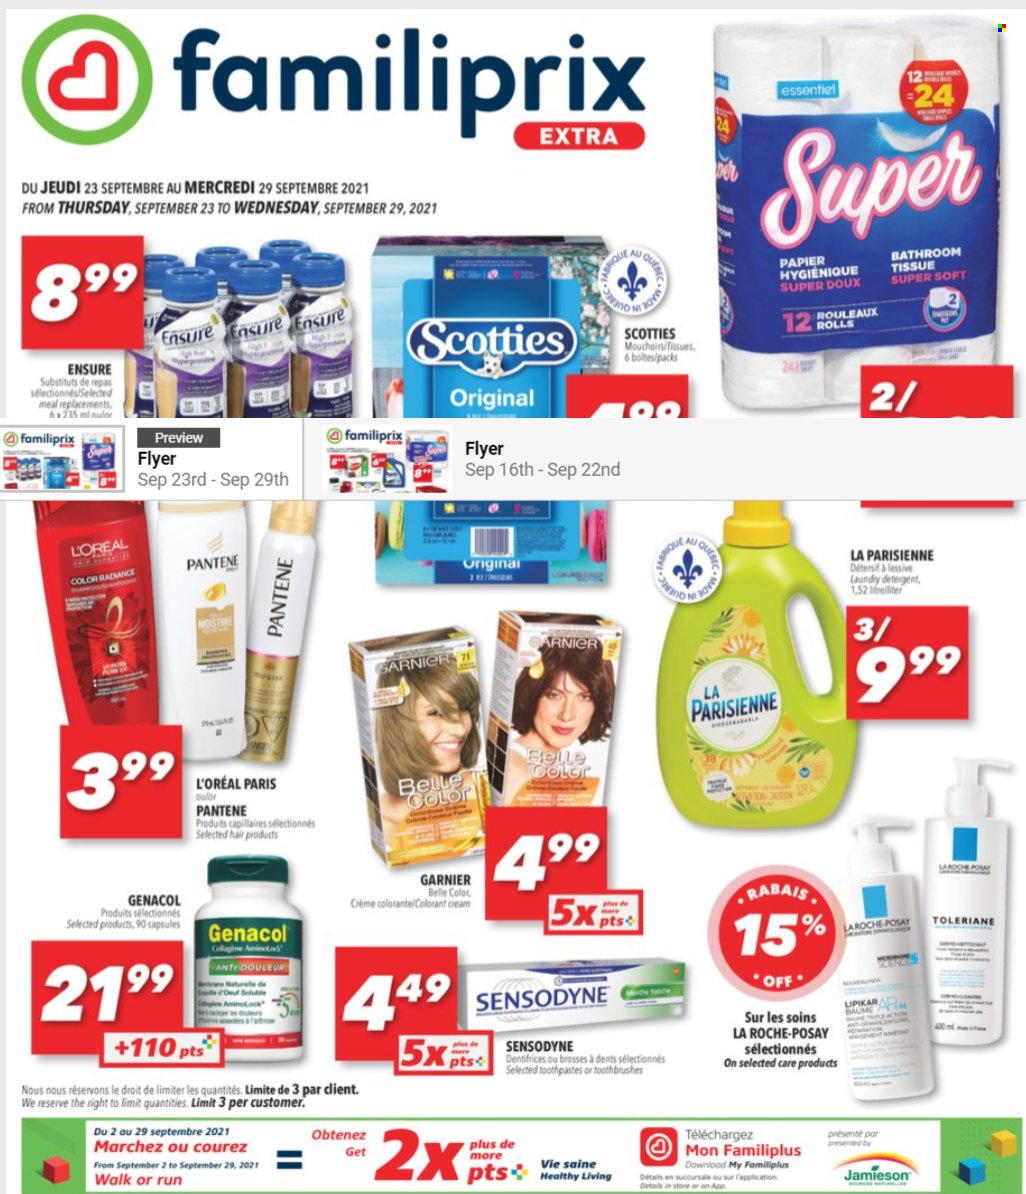 thumbnail - Familiprix Extra Flyer - September 23, 2021 - September 29, 2021 - Sales products - bath tissue, L’Oréal, La Roche-Posay, detergent, Garnier, Pantene, Sensodyne. Page 1.